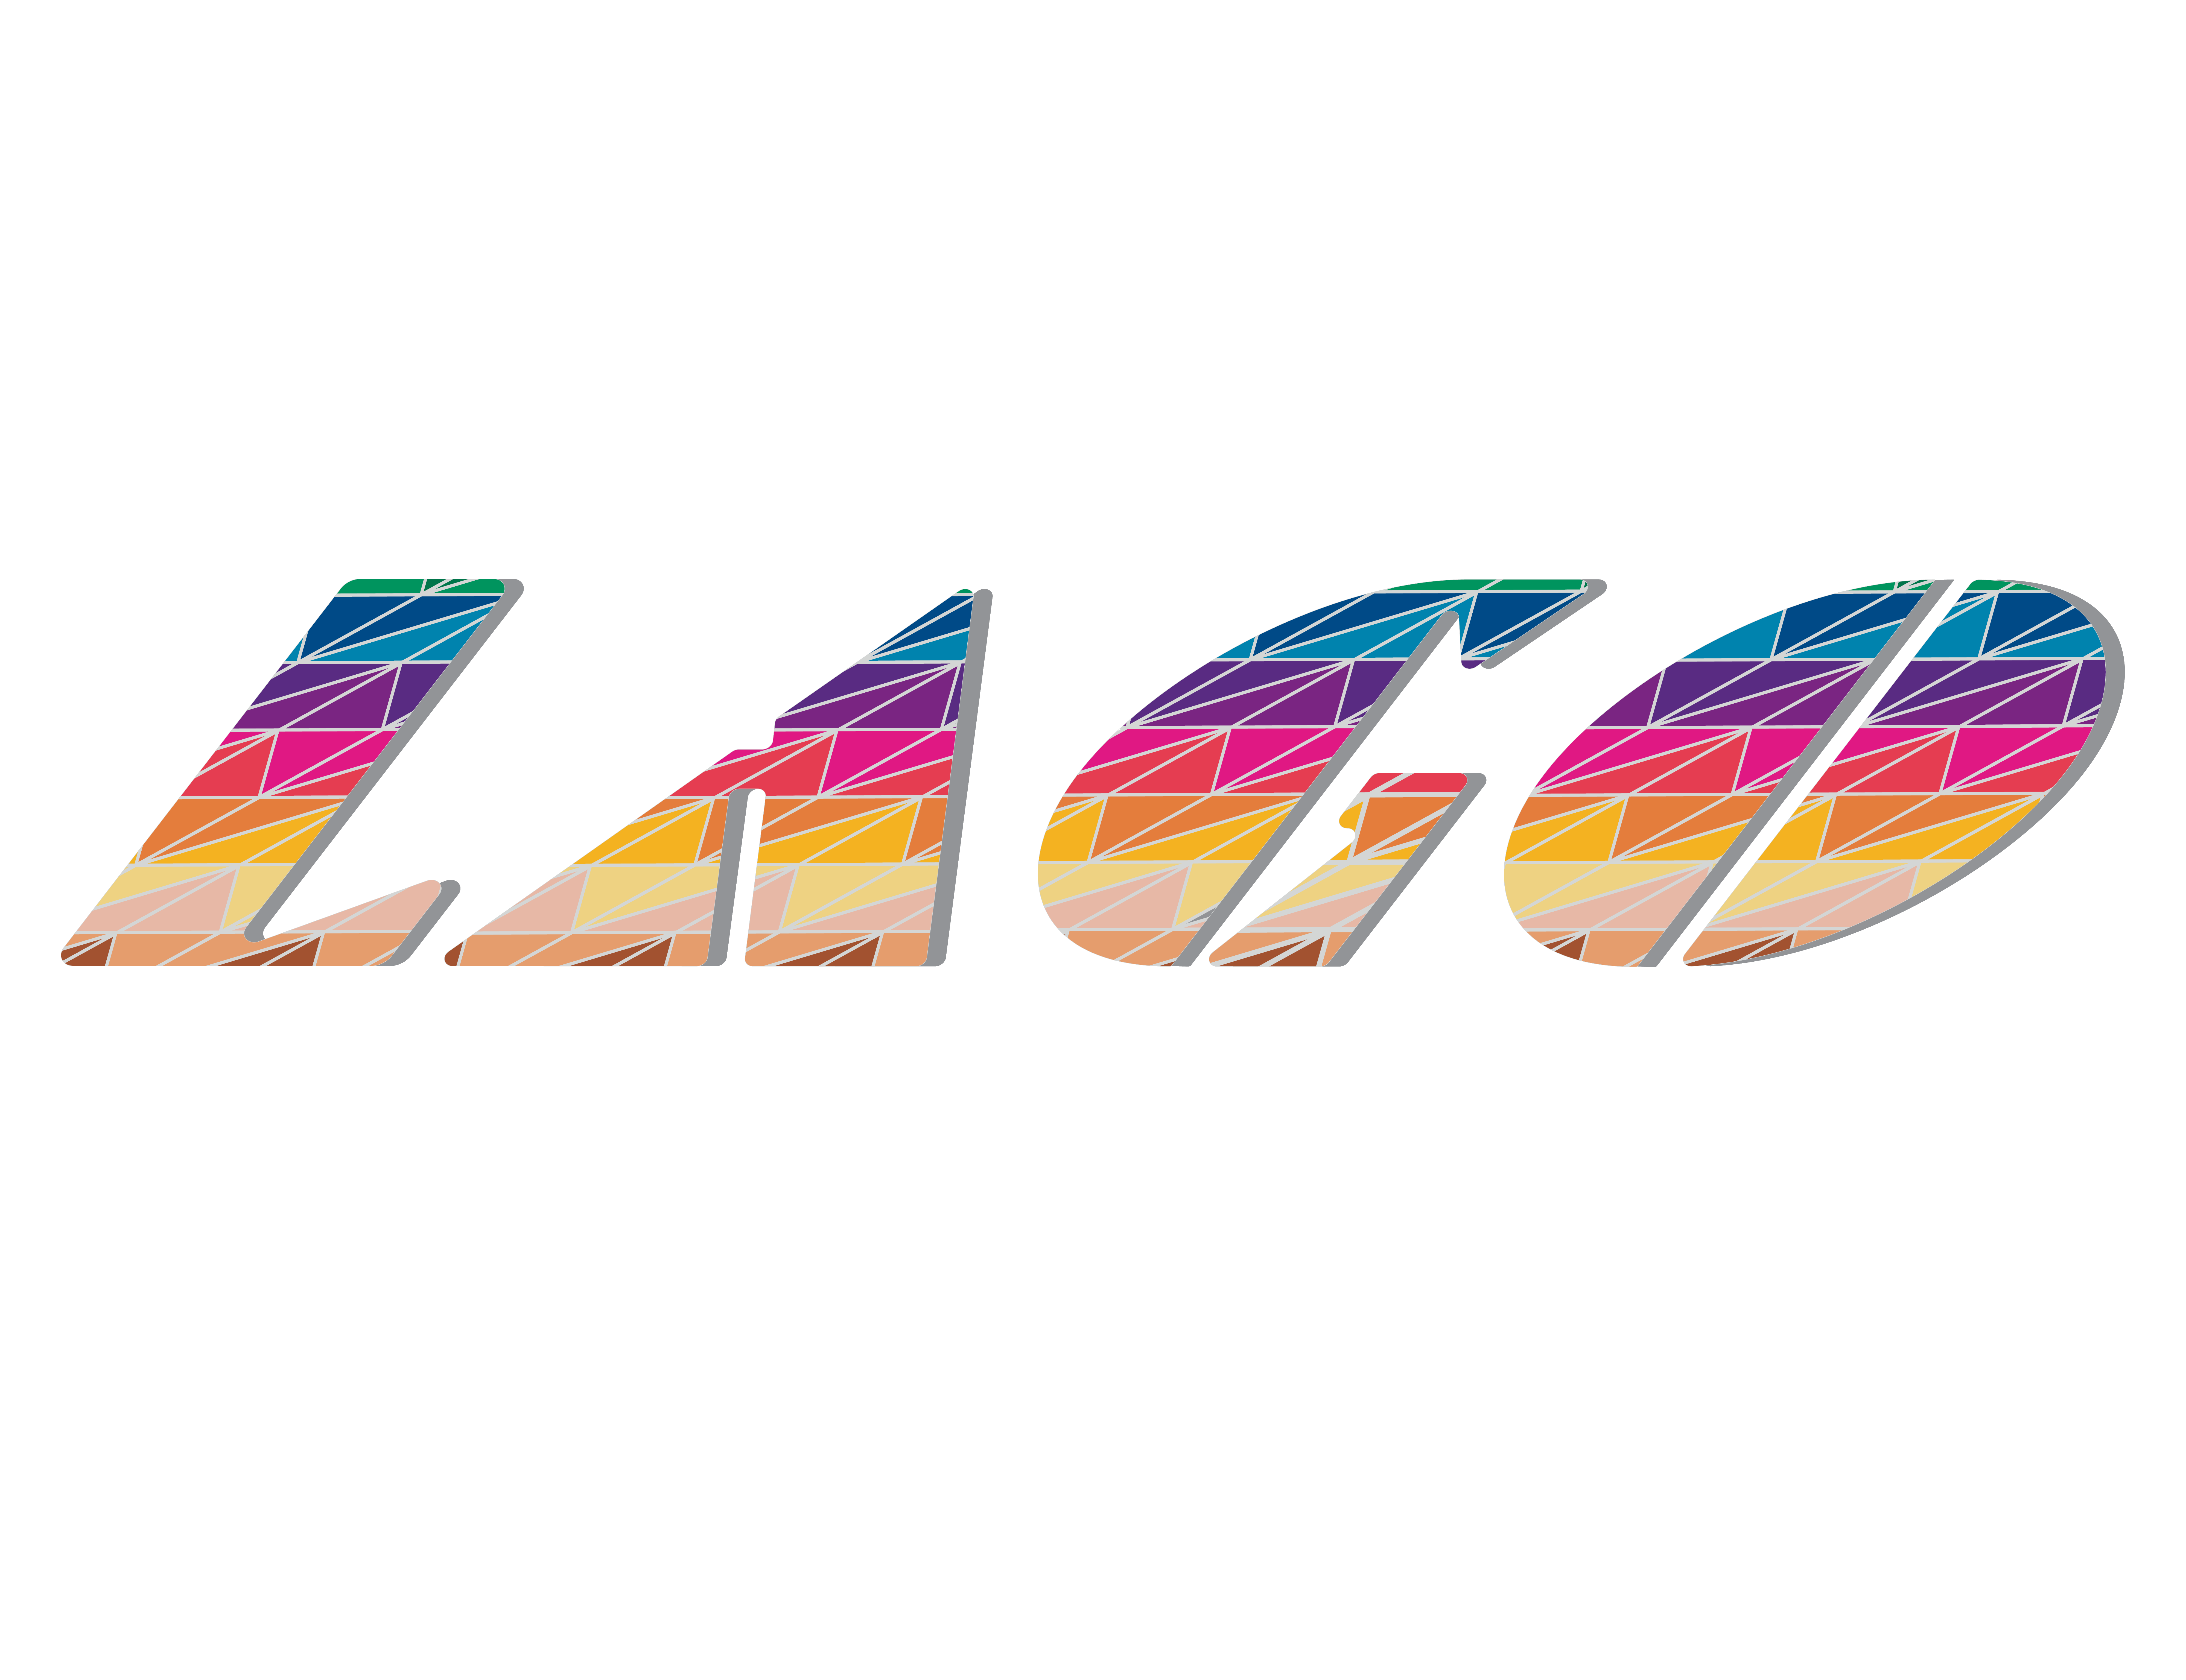 LAGO Network by Grupo Omega